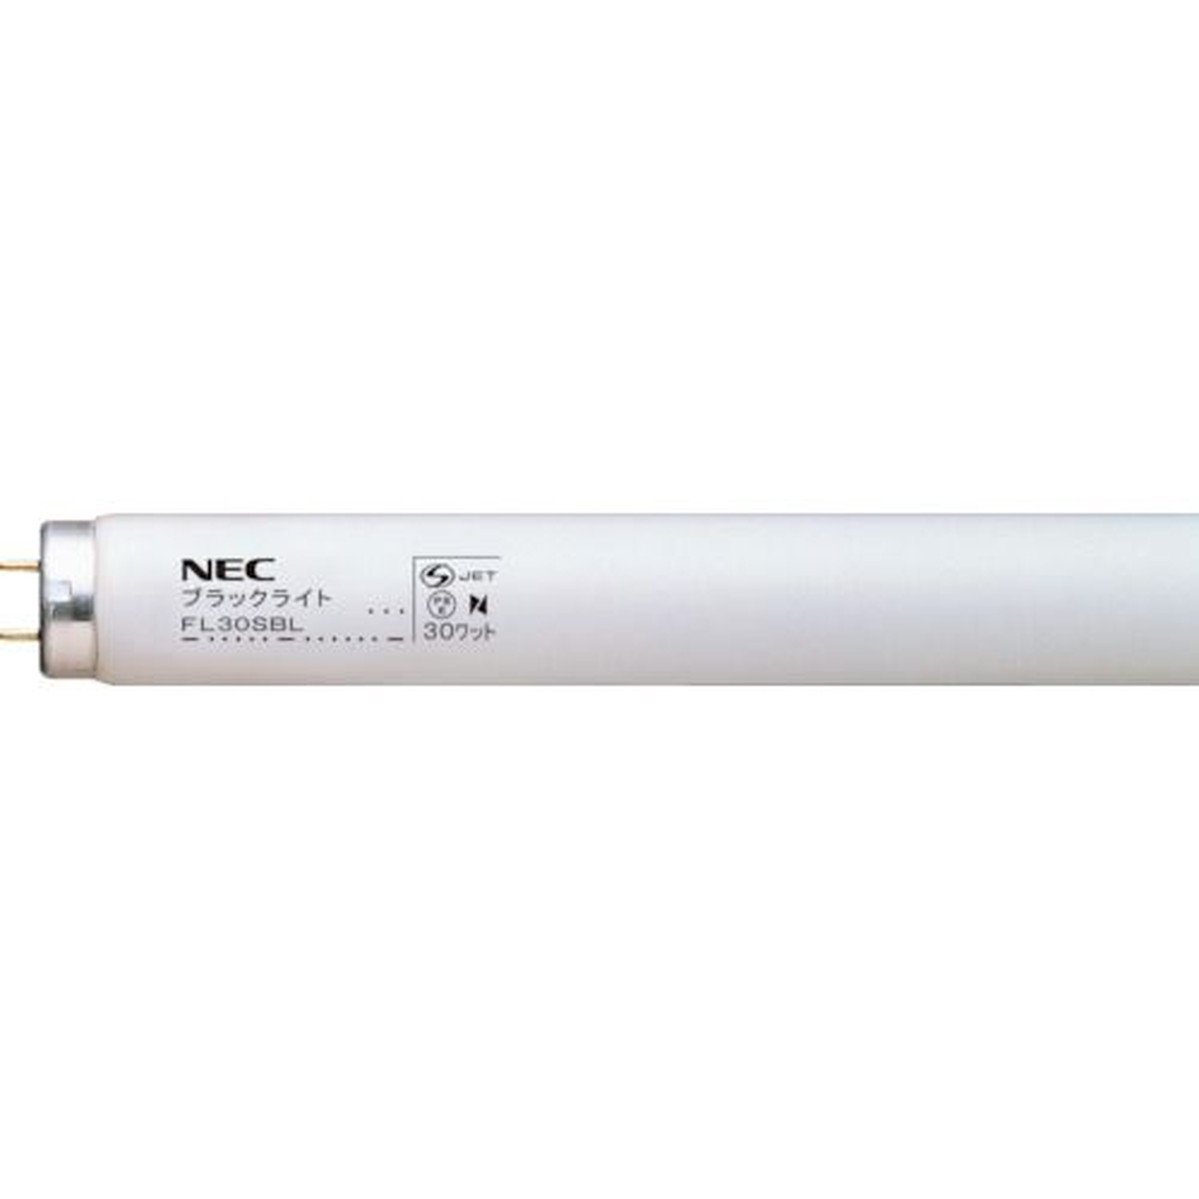 NEC 特殊蛍光ランプ 1本 FL30SBL 